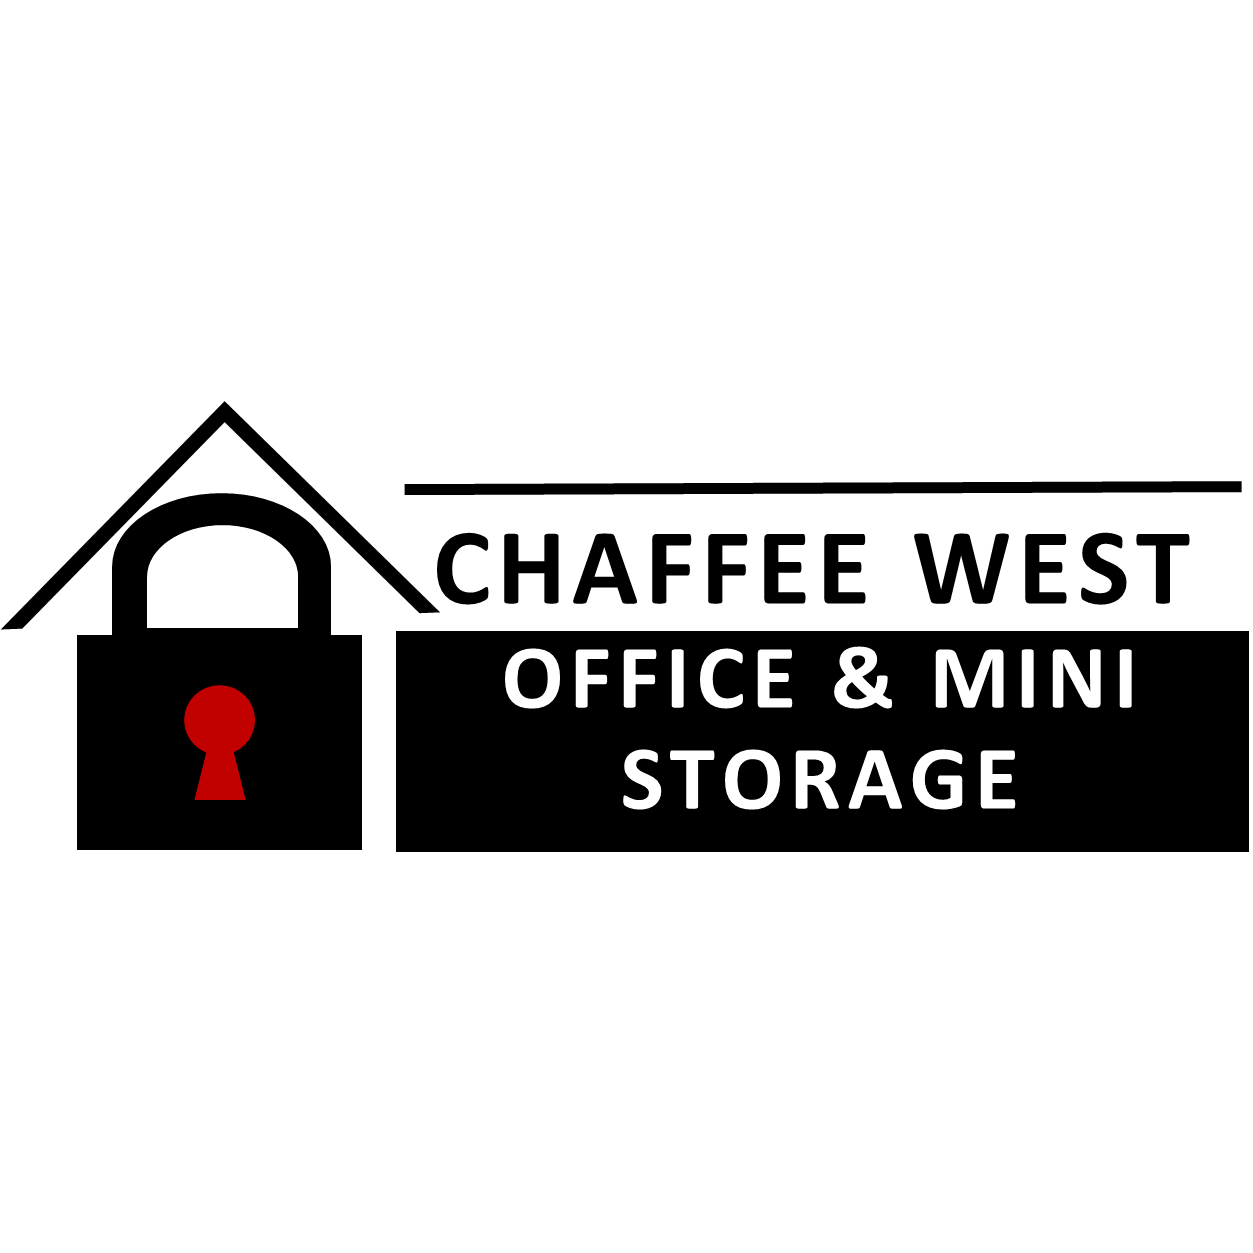 Chaffee West Office & Mini Storage - Fort Smith, AR 72916 - (479)322-8608 | ShowMeLocal.com